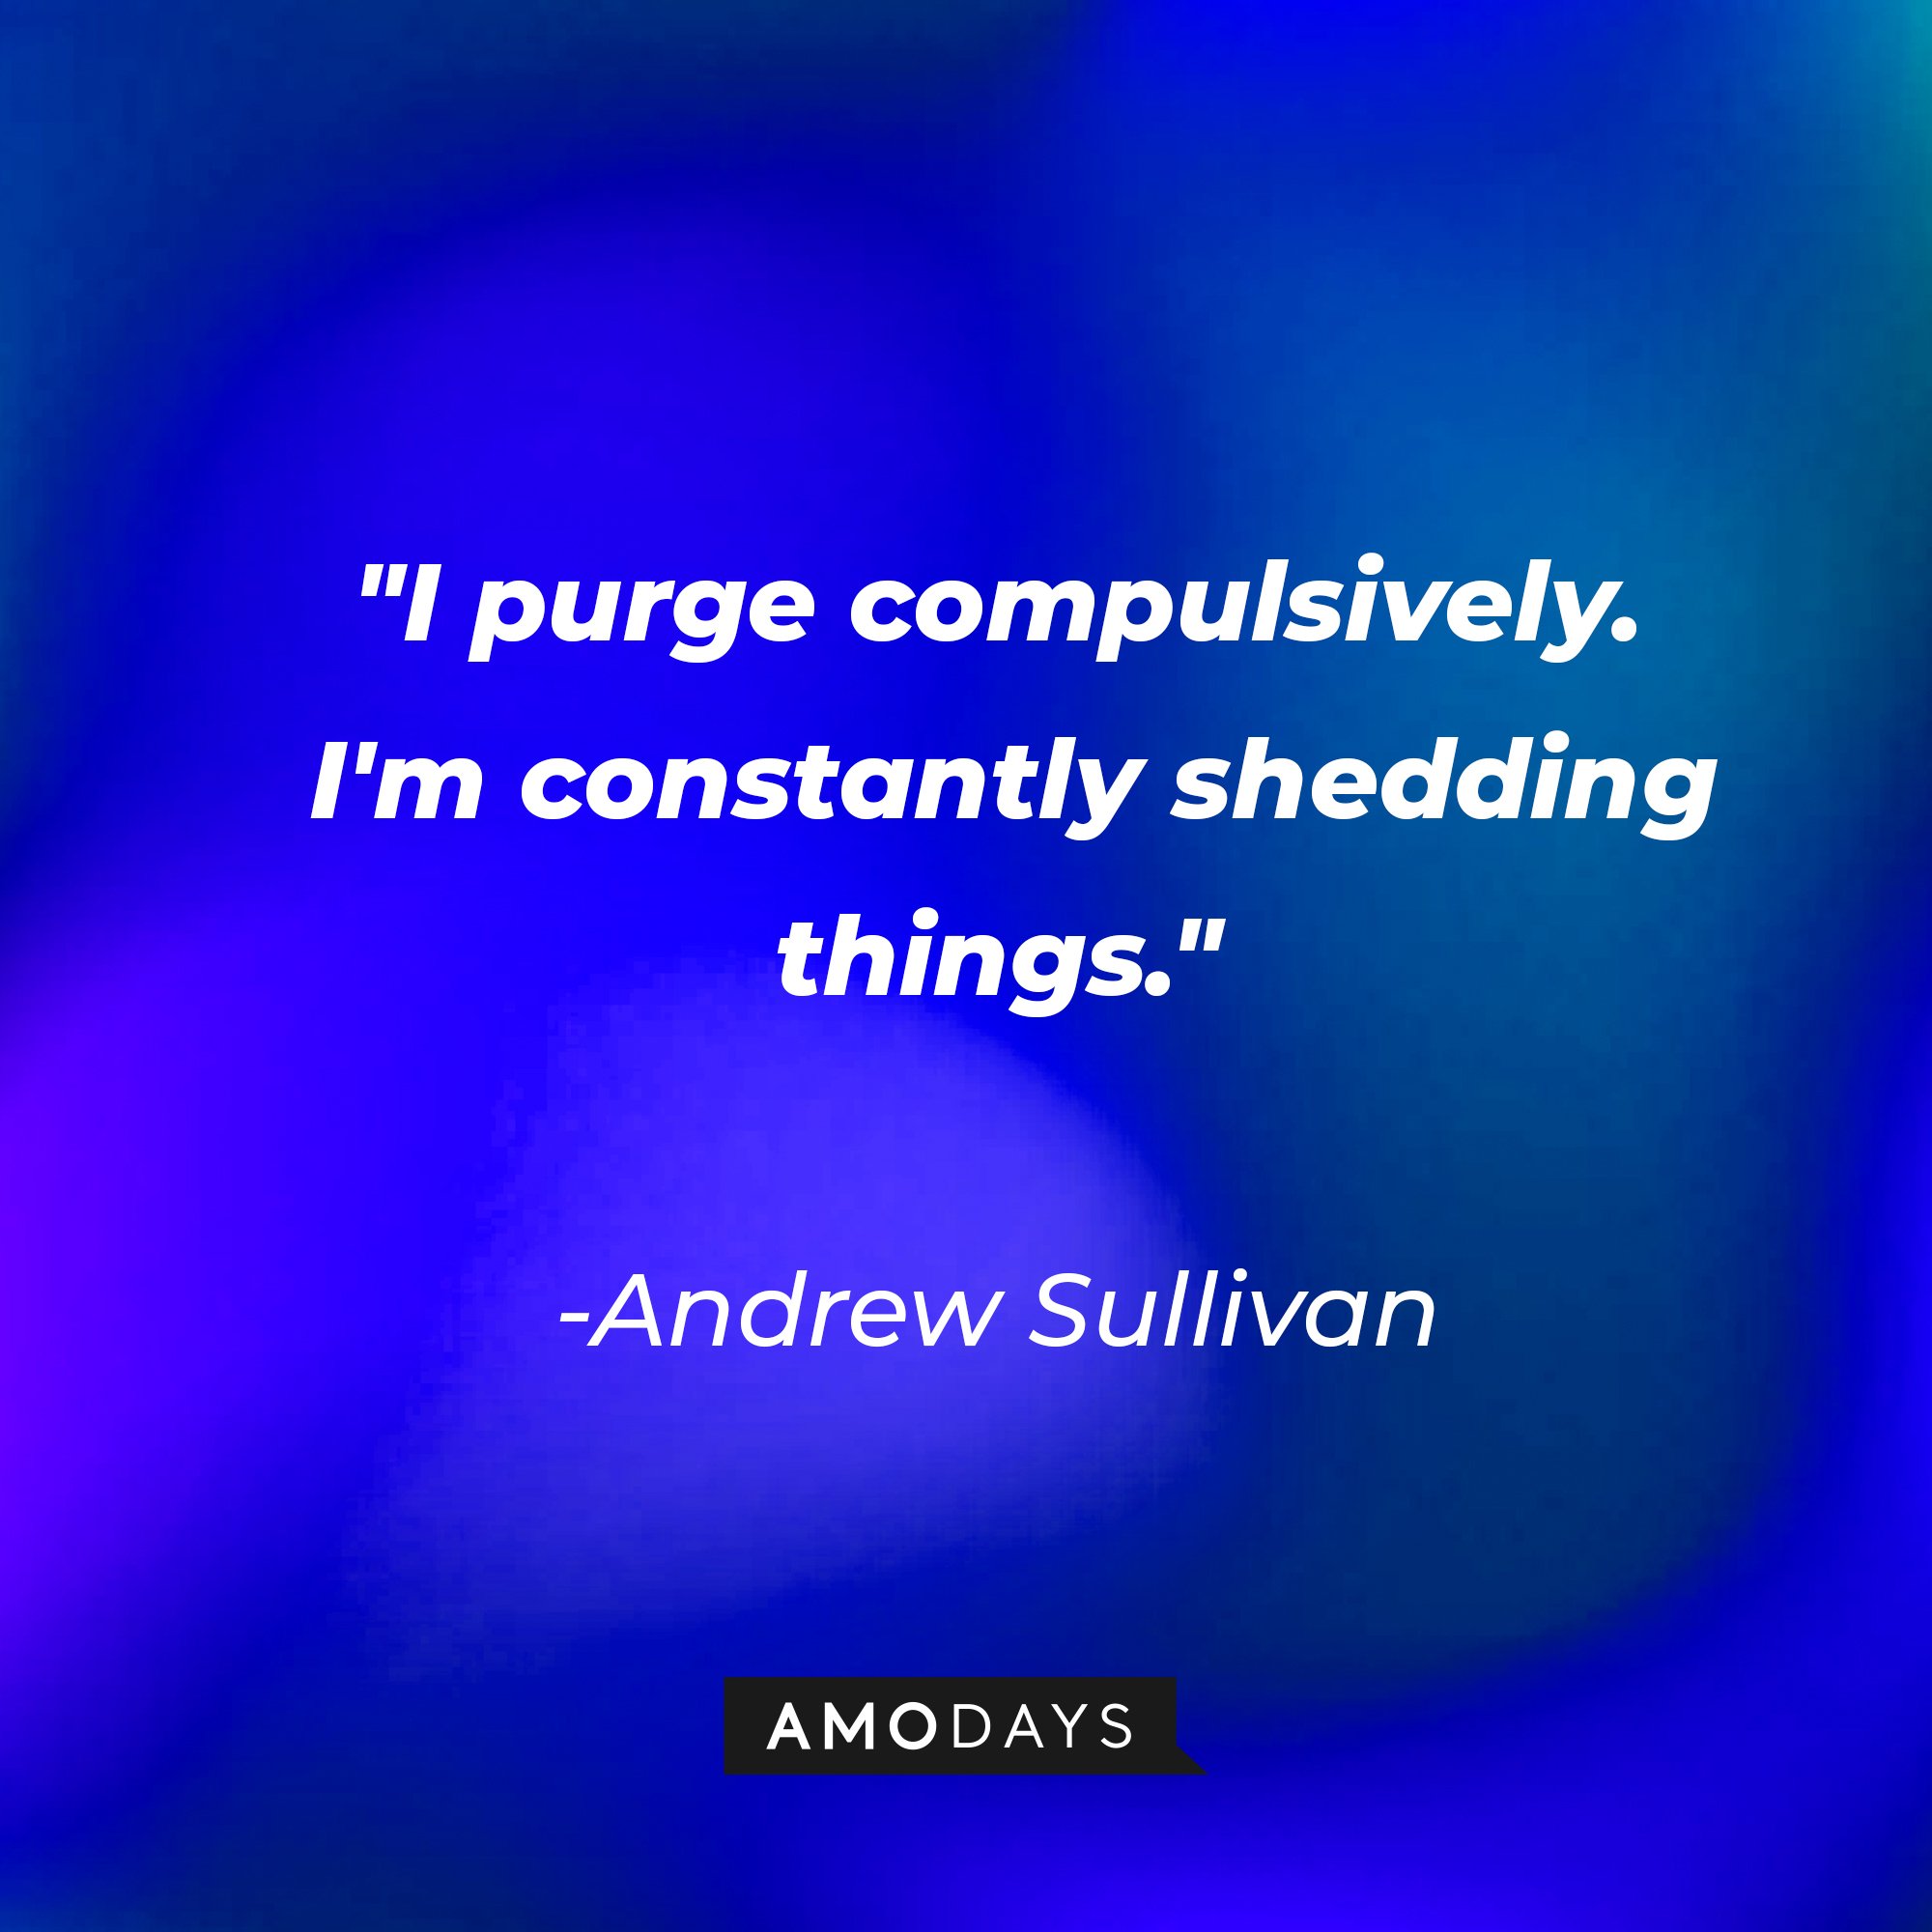 Andrew Sullivan’s quote: "I purge compulsively. I'm constantly shedding things." | Image: AmoDays  